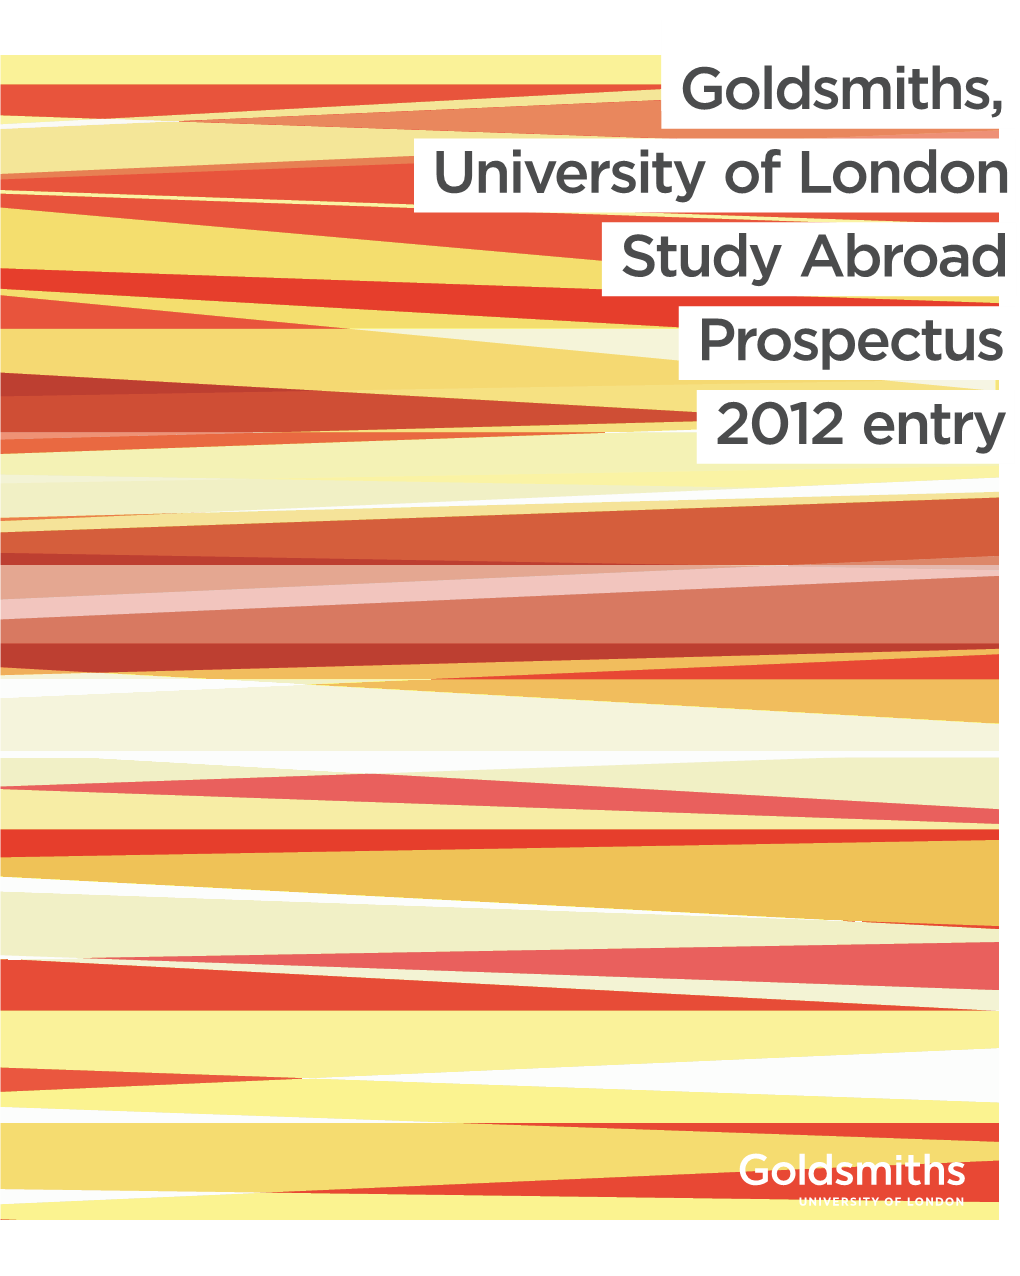 Goldsmiths, University of London Study Abroad Prospectus 2012 Entry